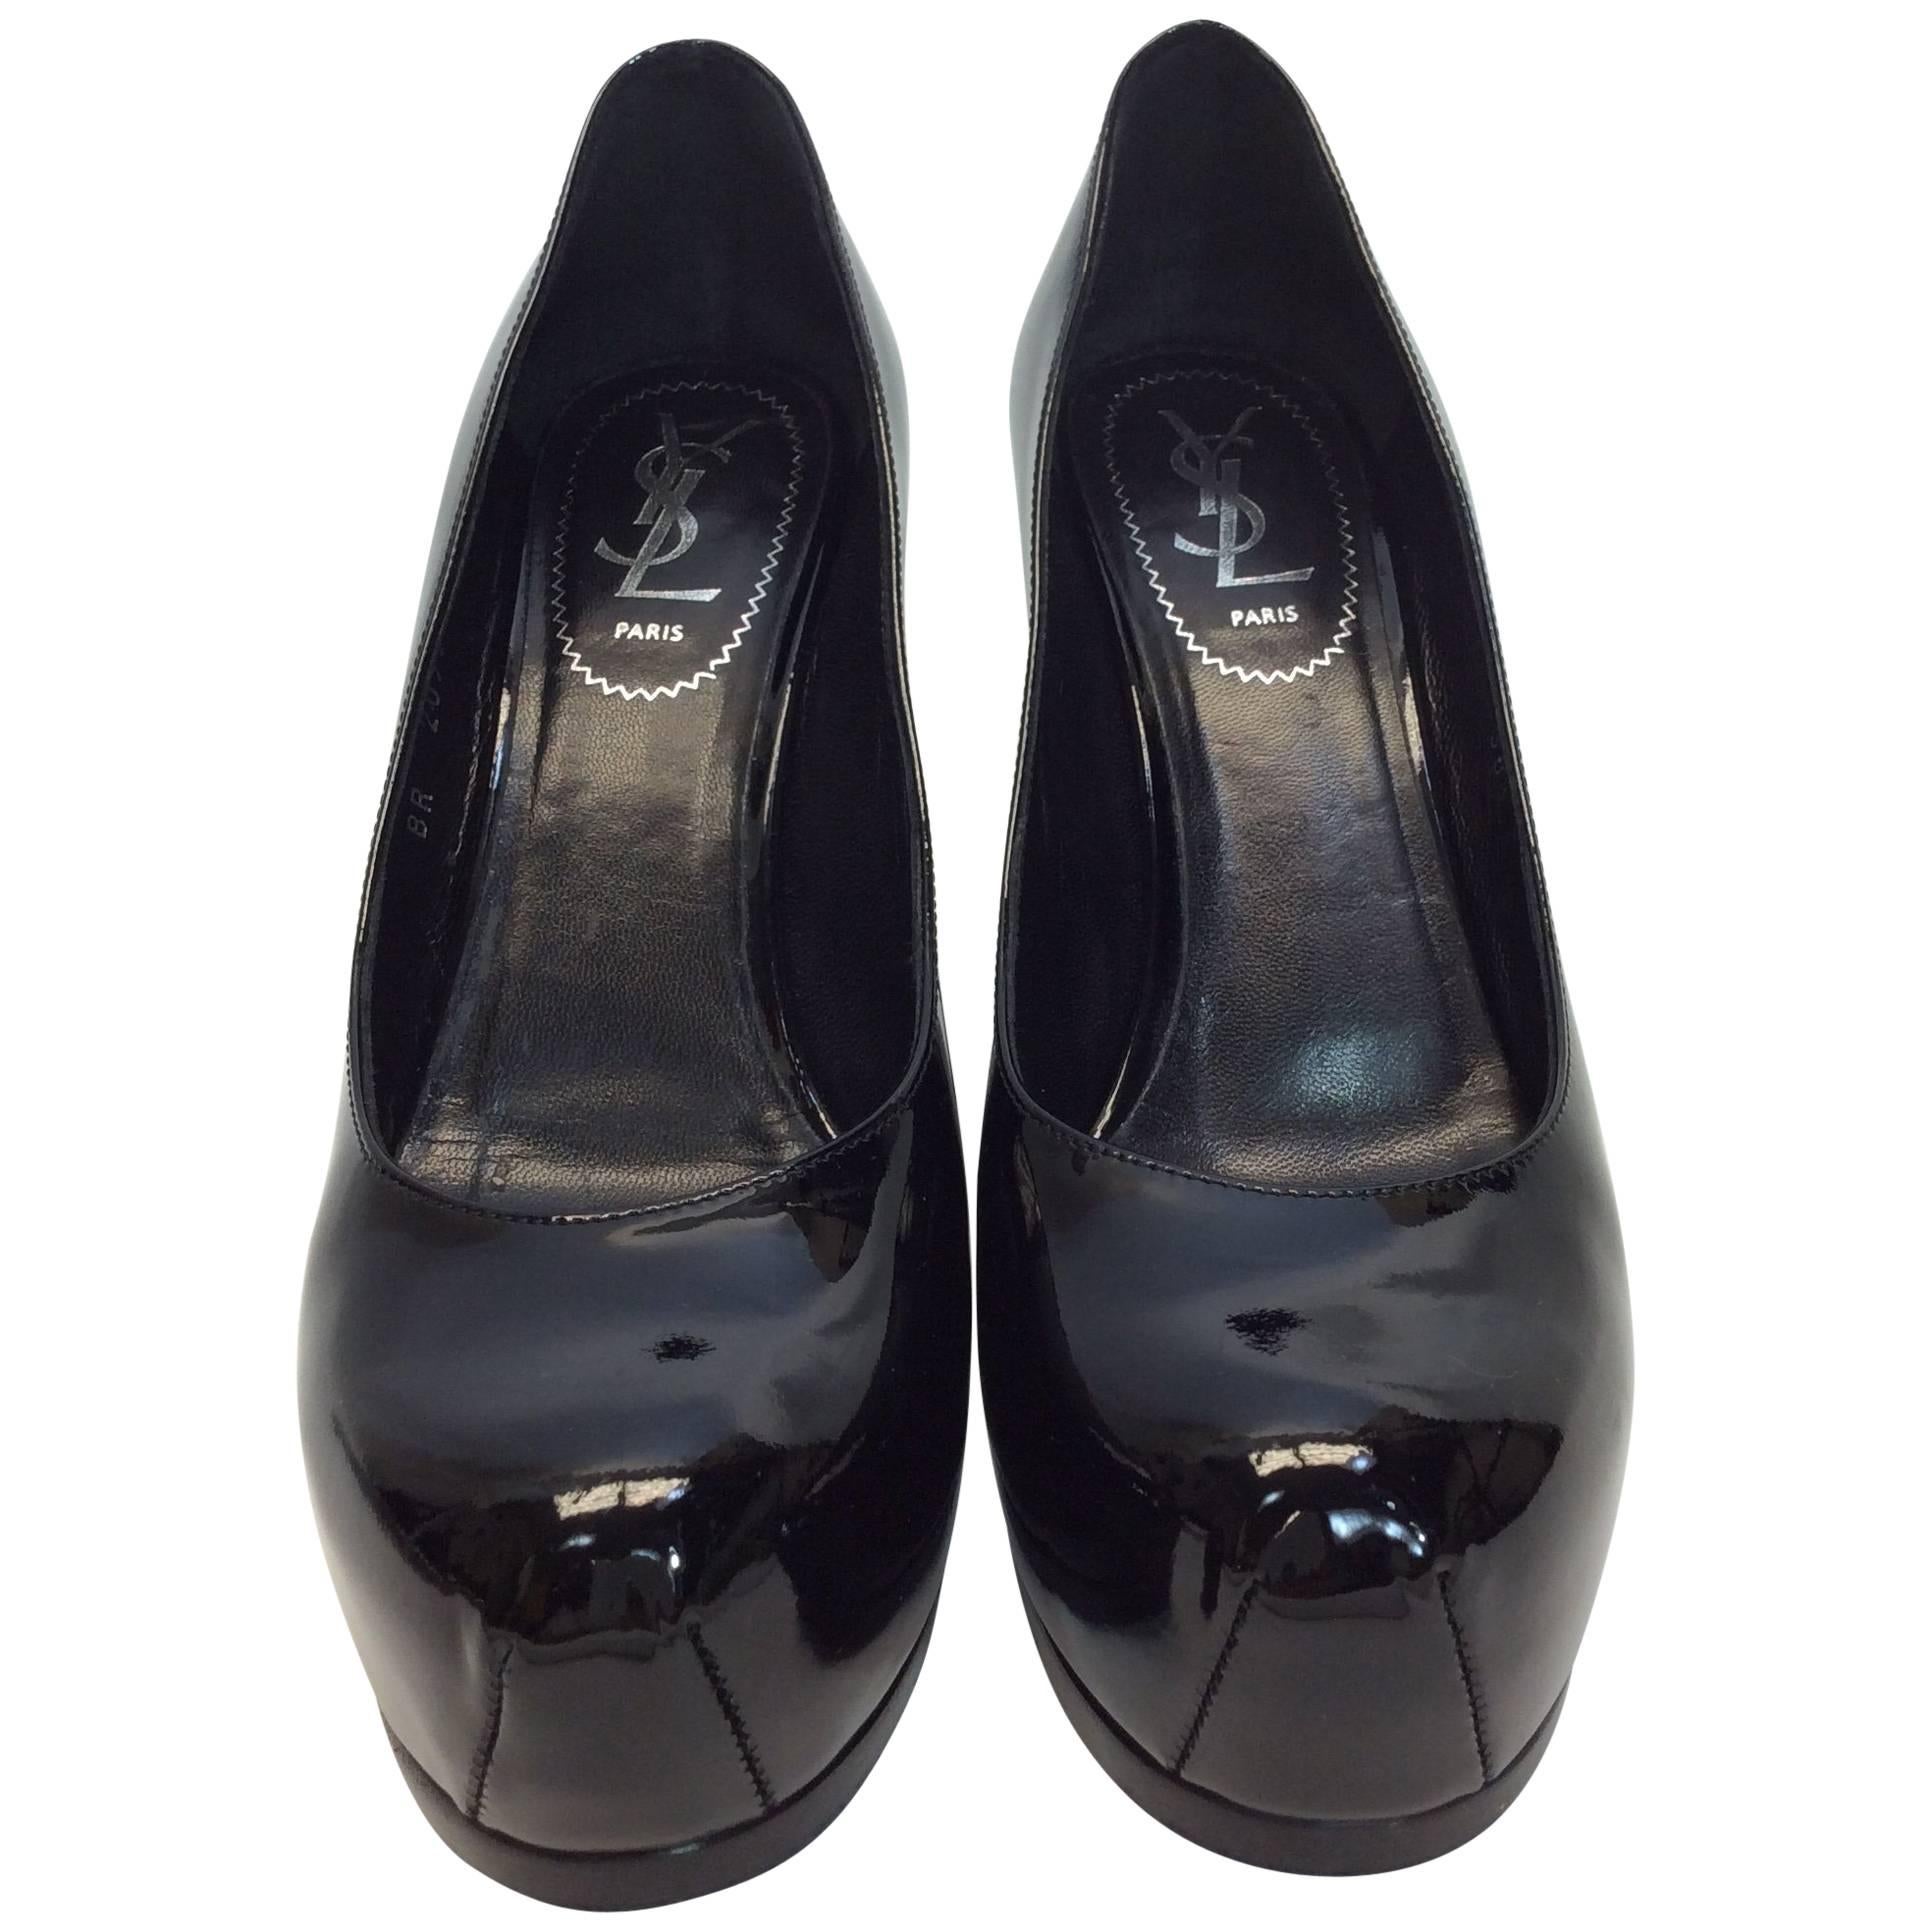 Yves Saint Laurent Patent Leather Black Stiletto For Sale